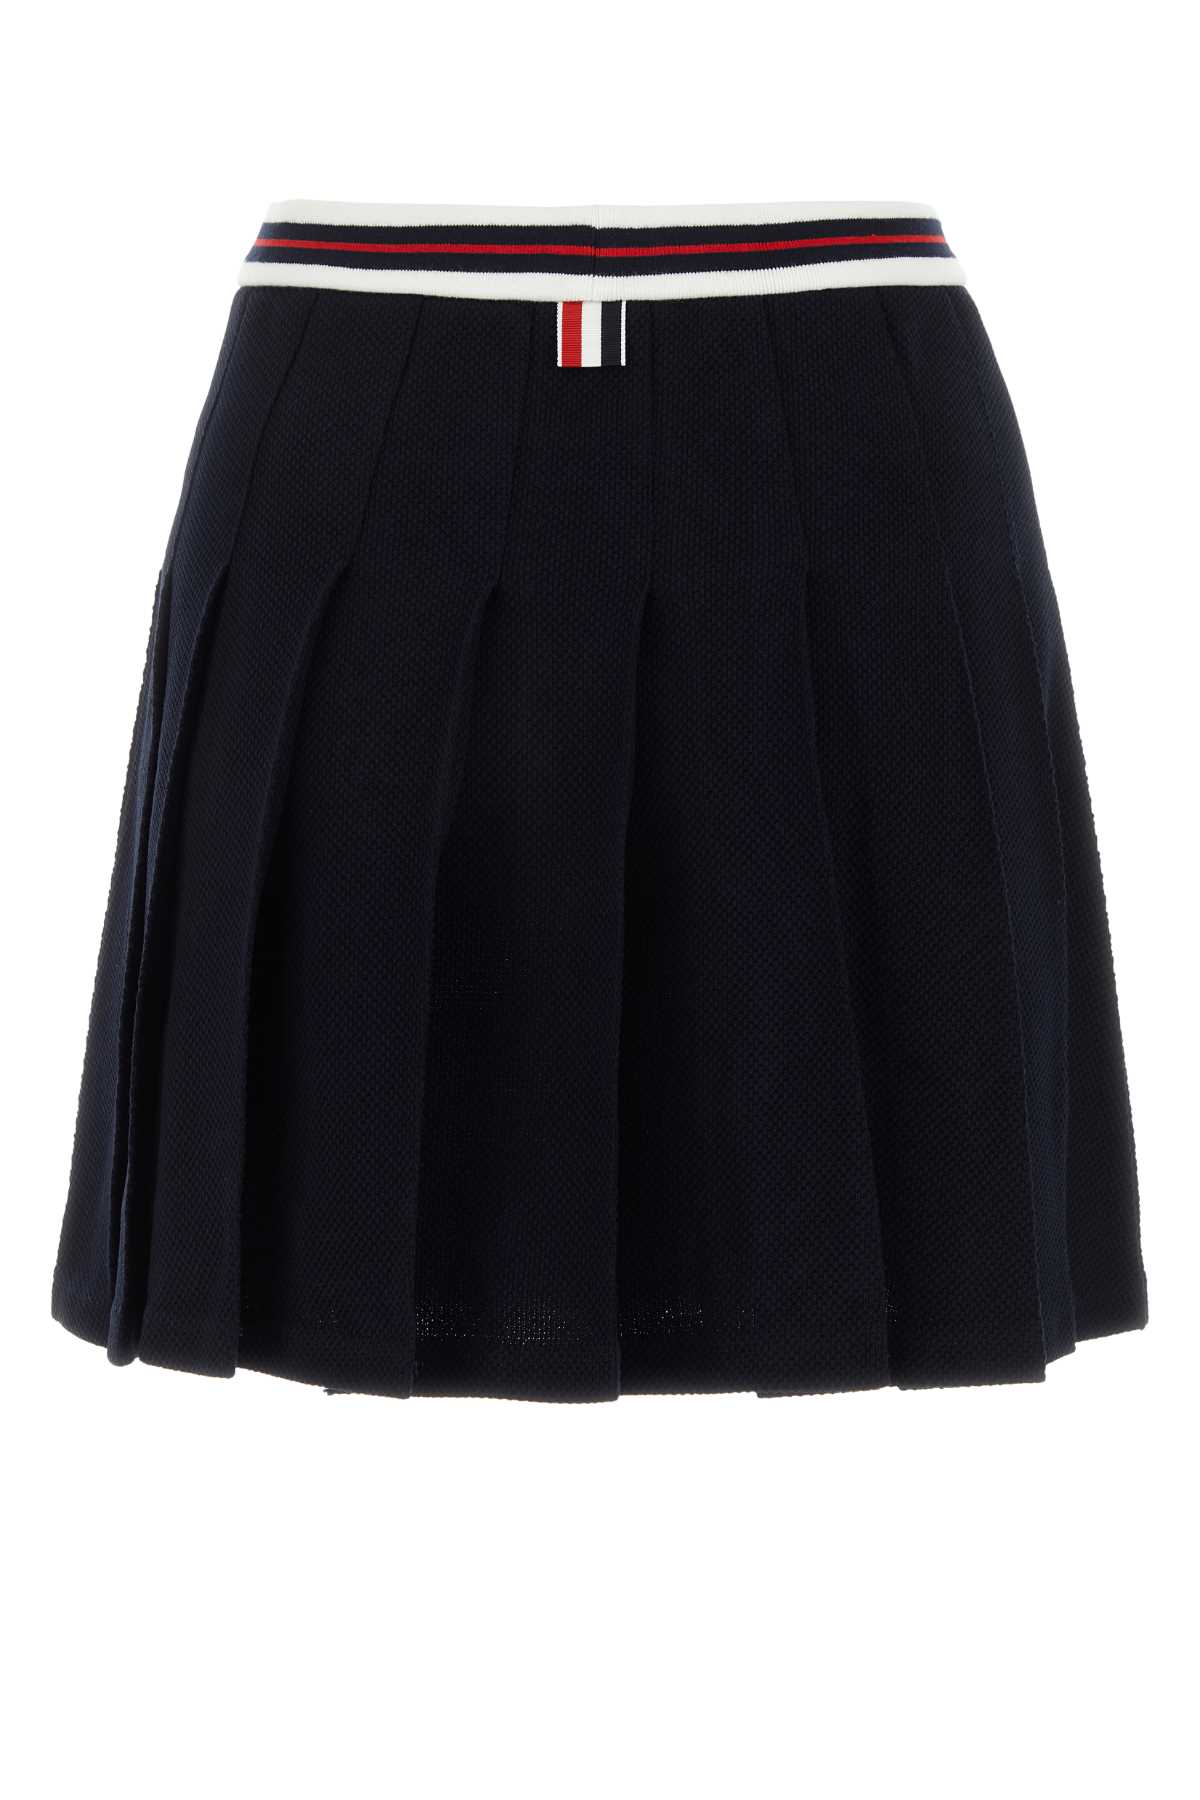 Thom Browne Midnight Blue Crochet Mini Skirt In Navy